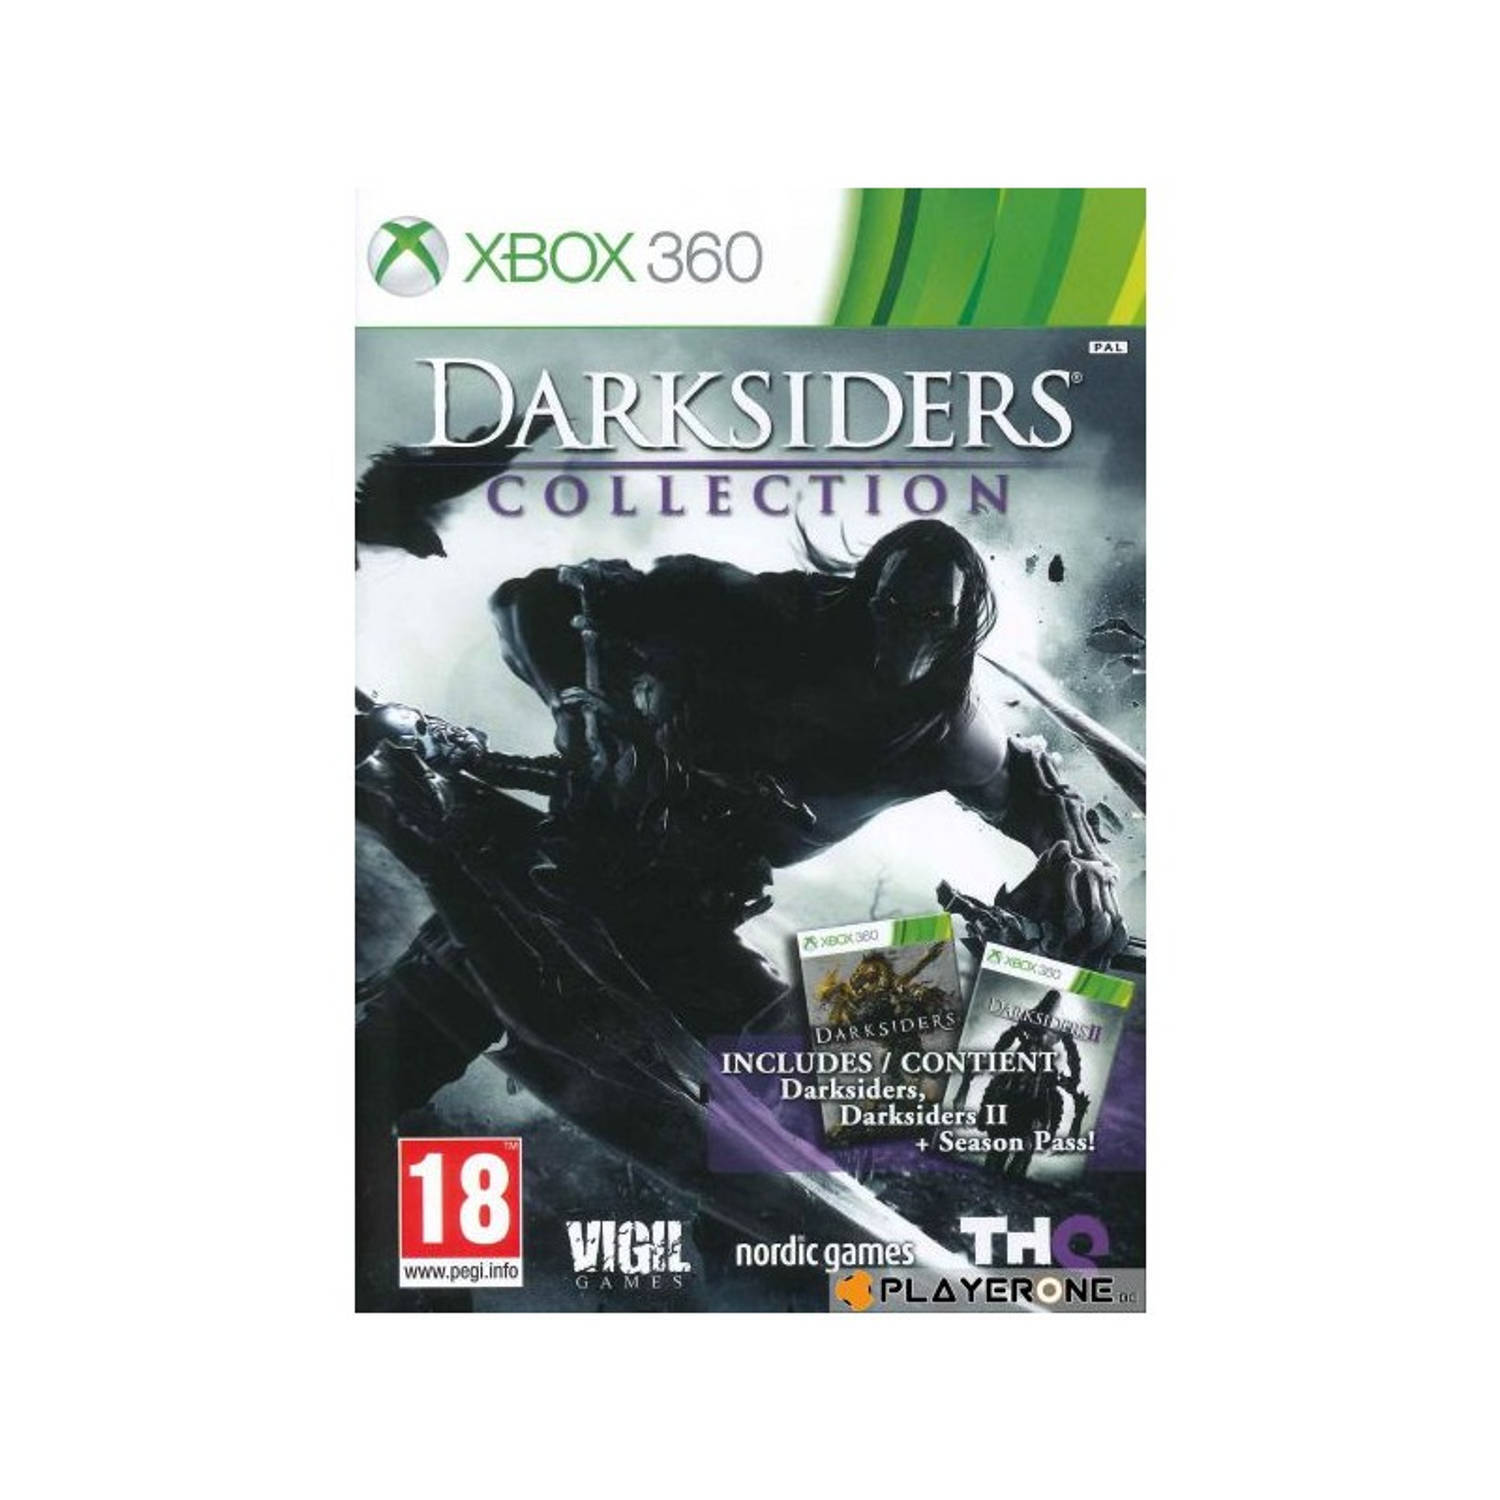 VideogamesNL darksiders collection - xbox 360 Xbox 360